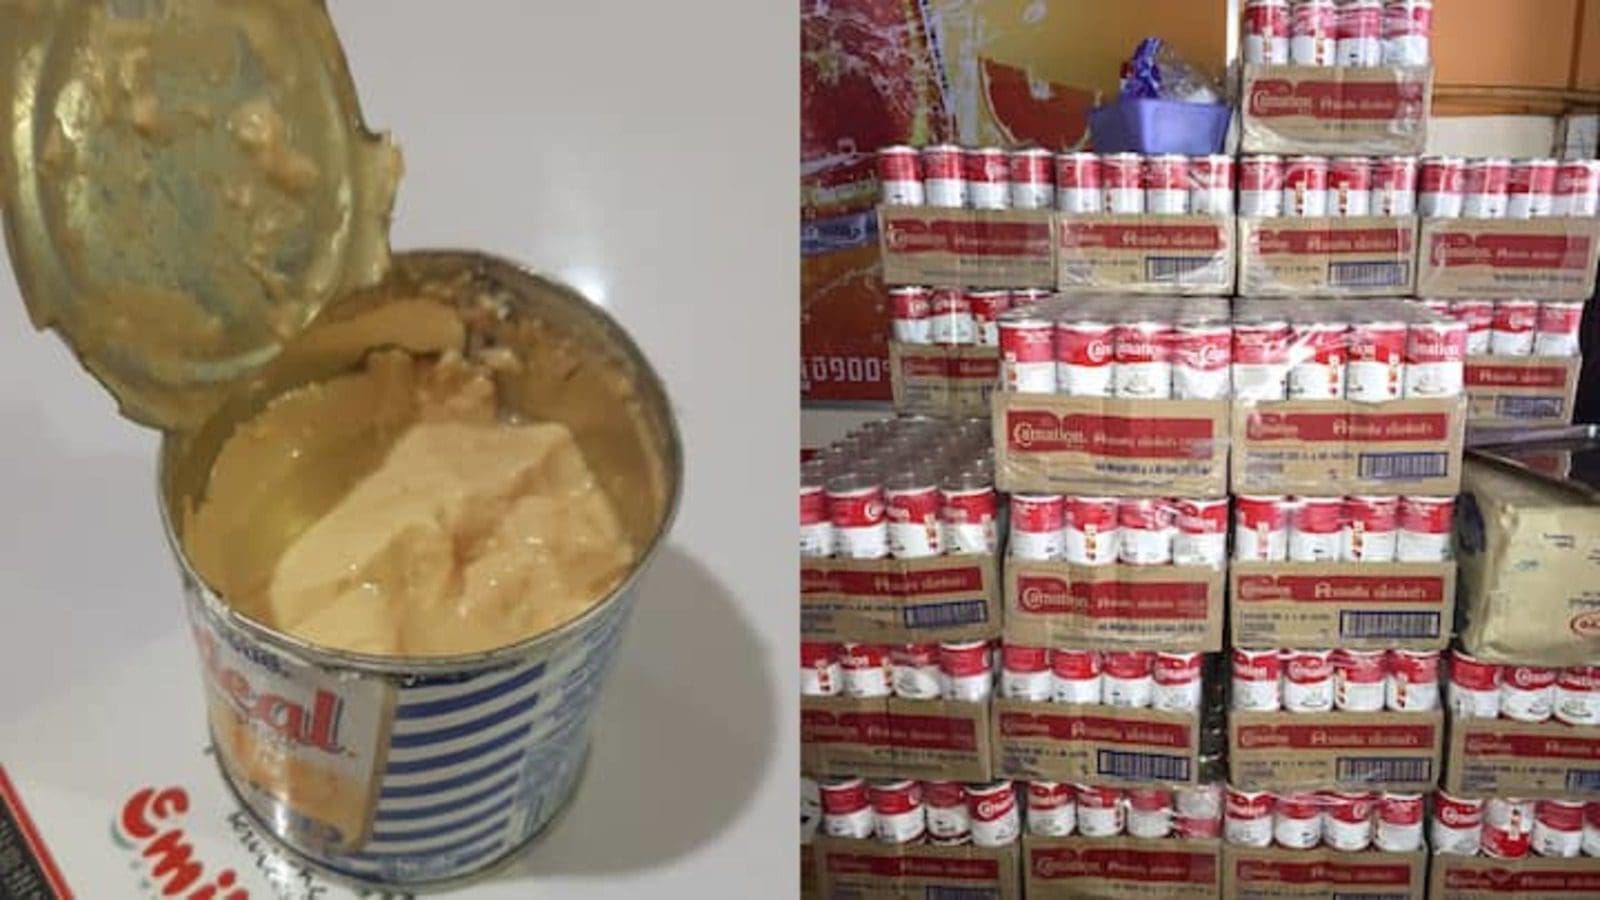 Nestlé Ghana rids shelves of defective products